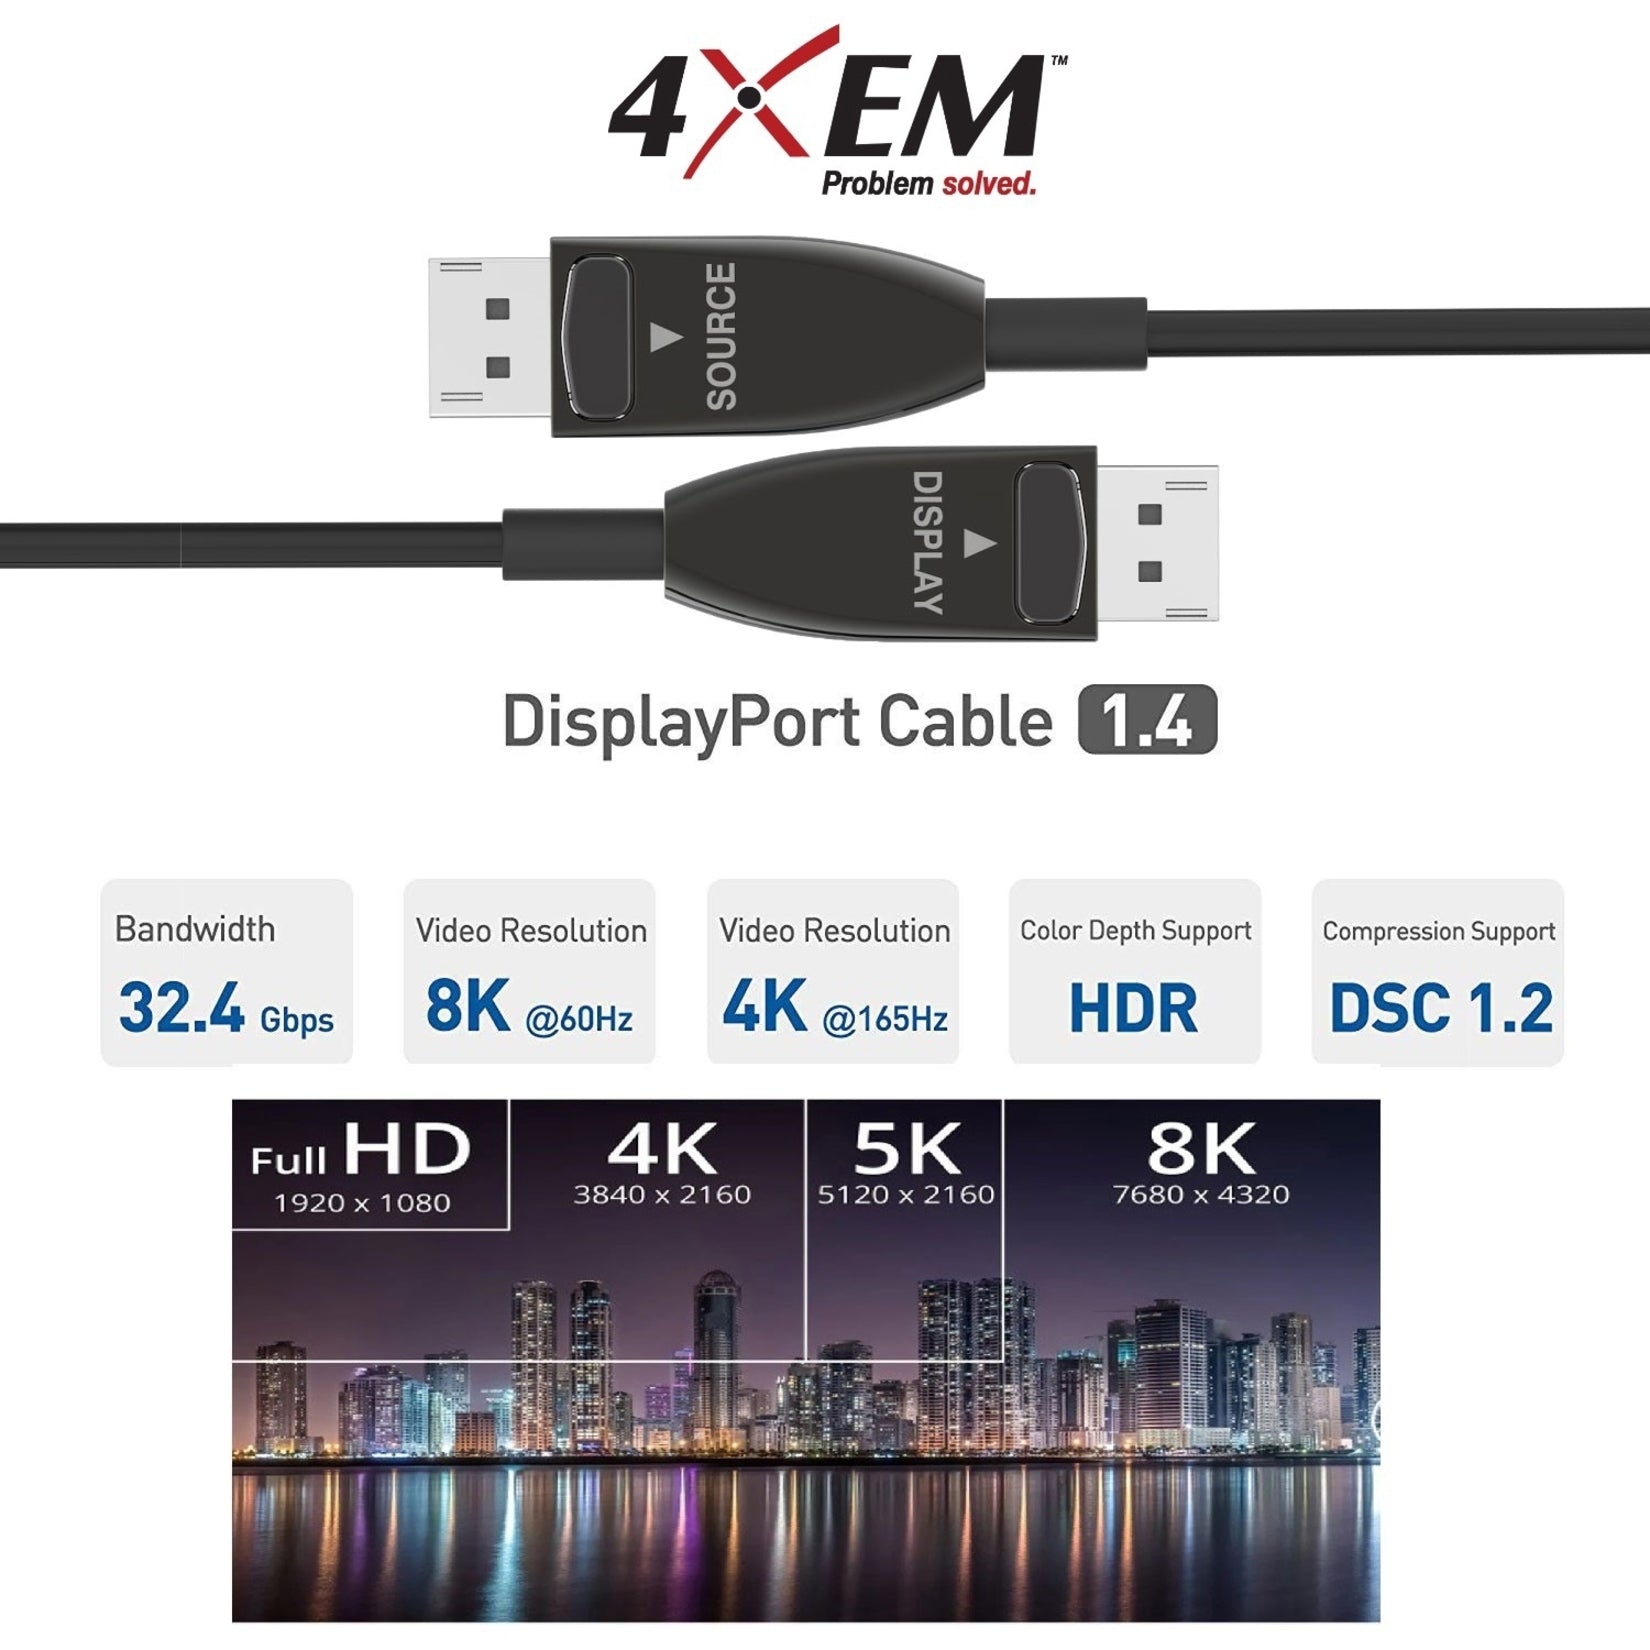 4XEM 4XFIBERDPAOC15M 15M 50FT Active Optical Fiber 1.4 DisplayPort Cable, High-Speed Data Transfer, EMI/RF Protection